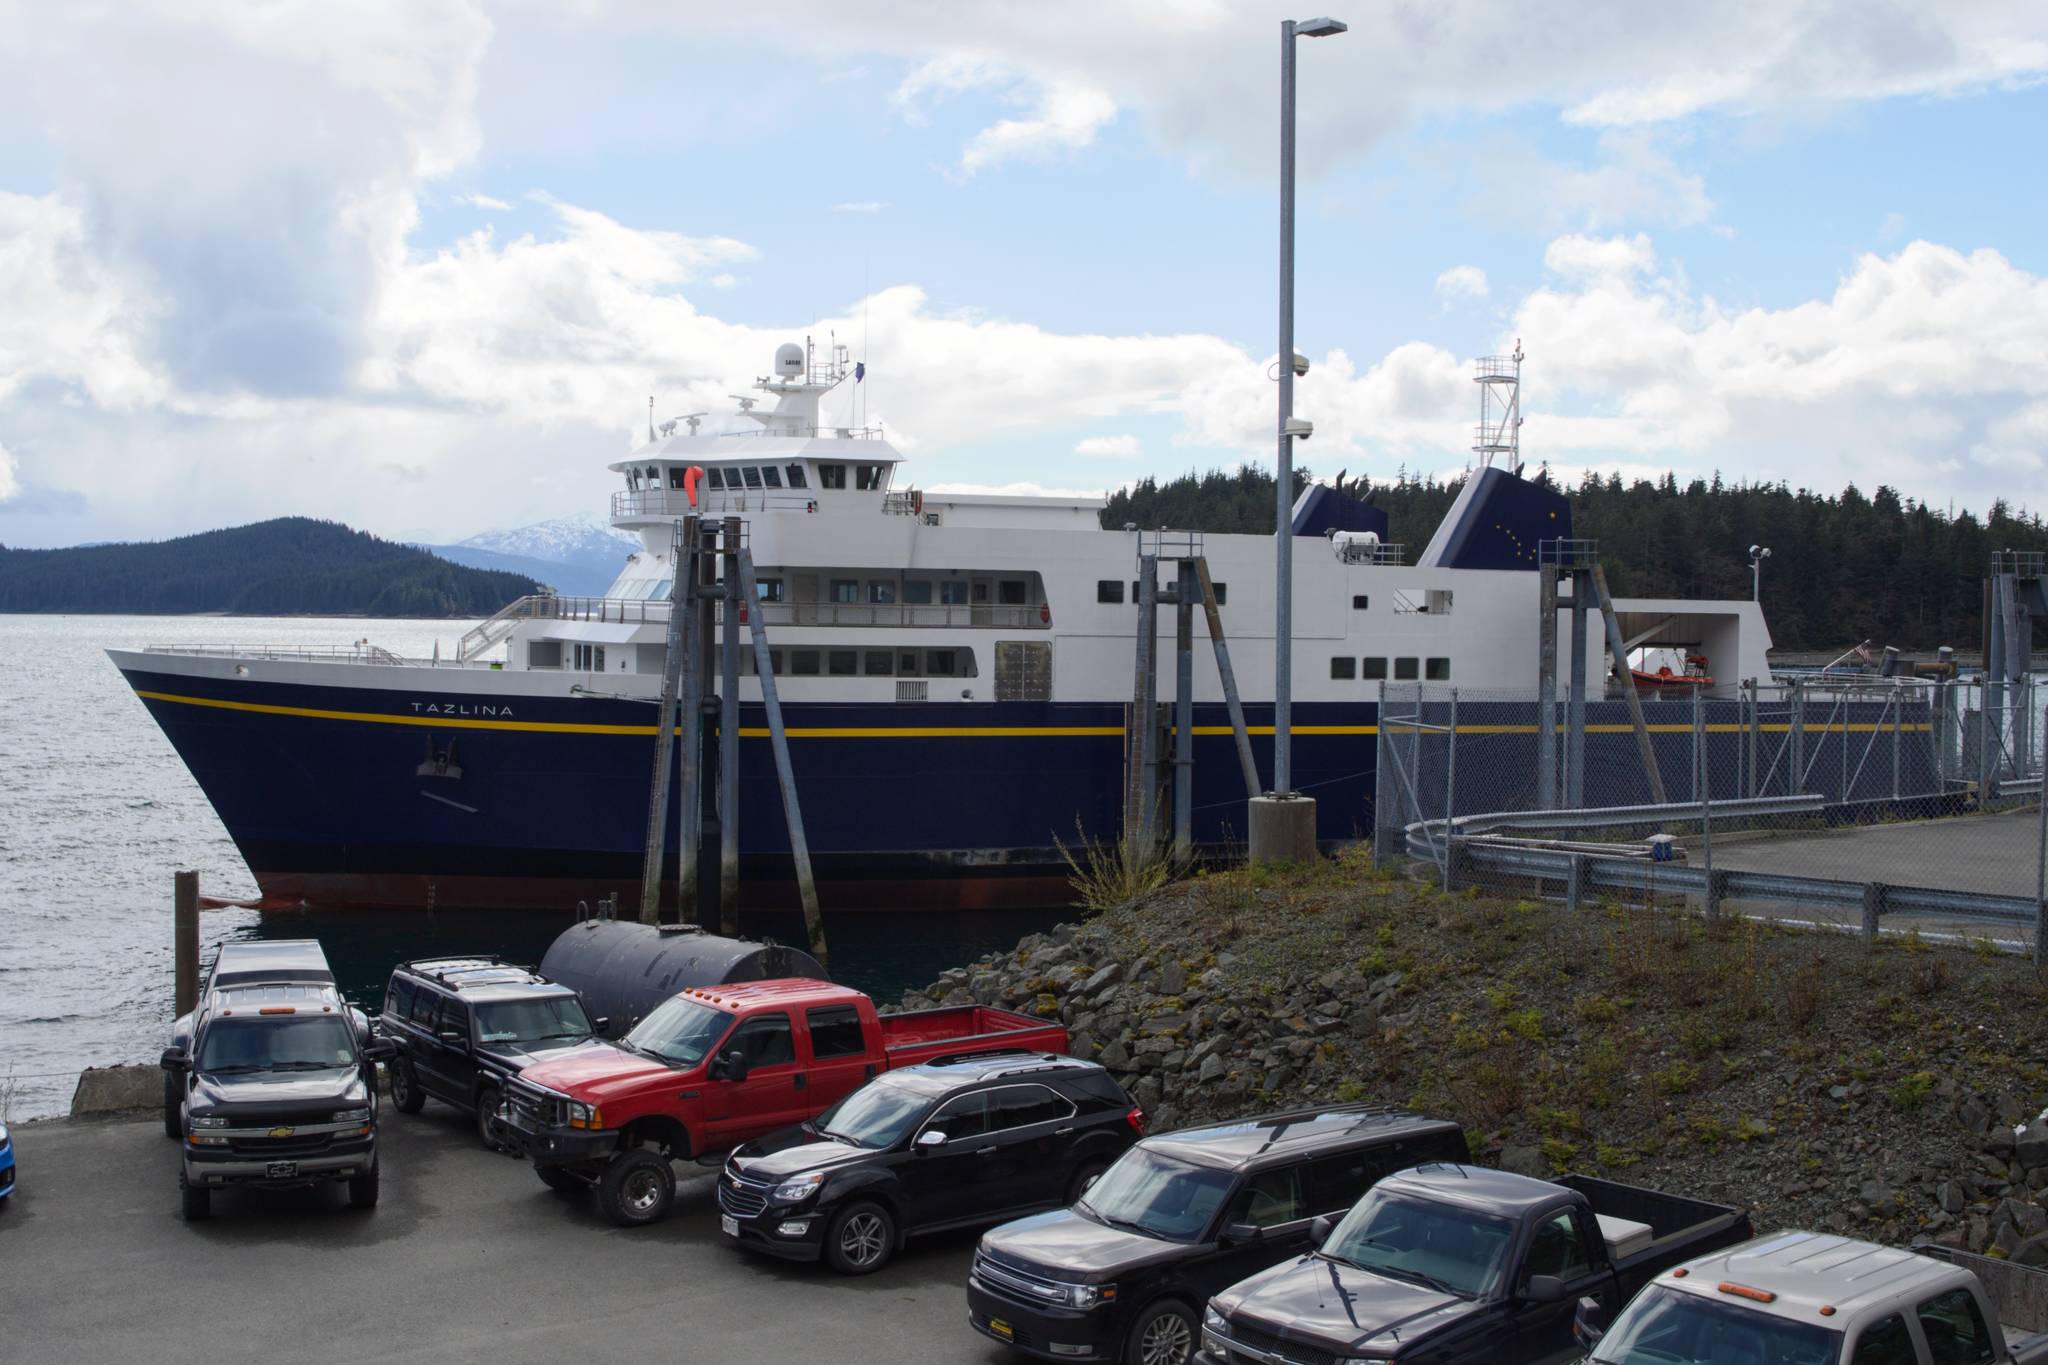 Opinion: Getting rid of ferry system will hurt Alaska’s economy